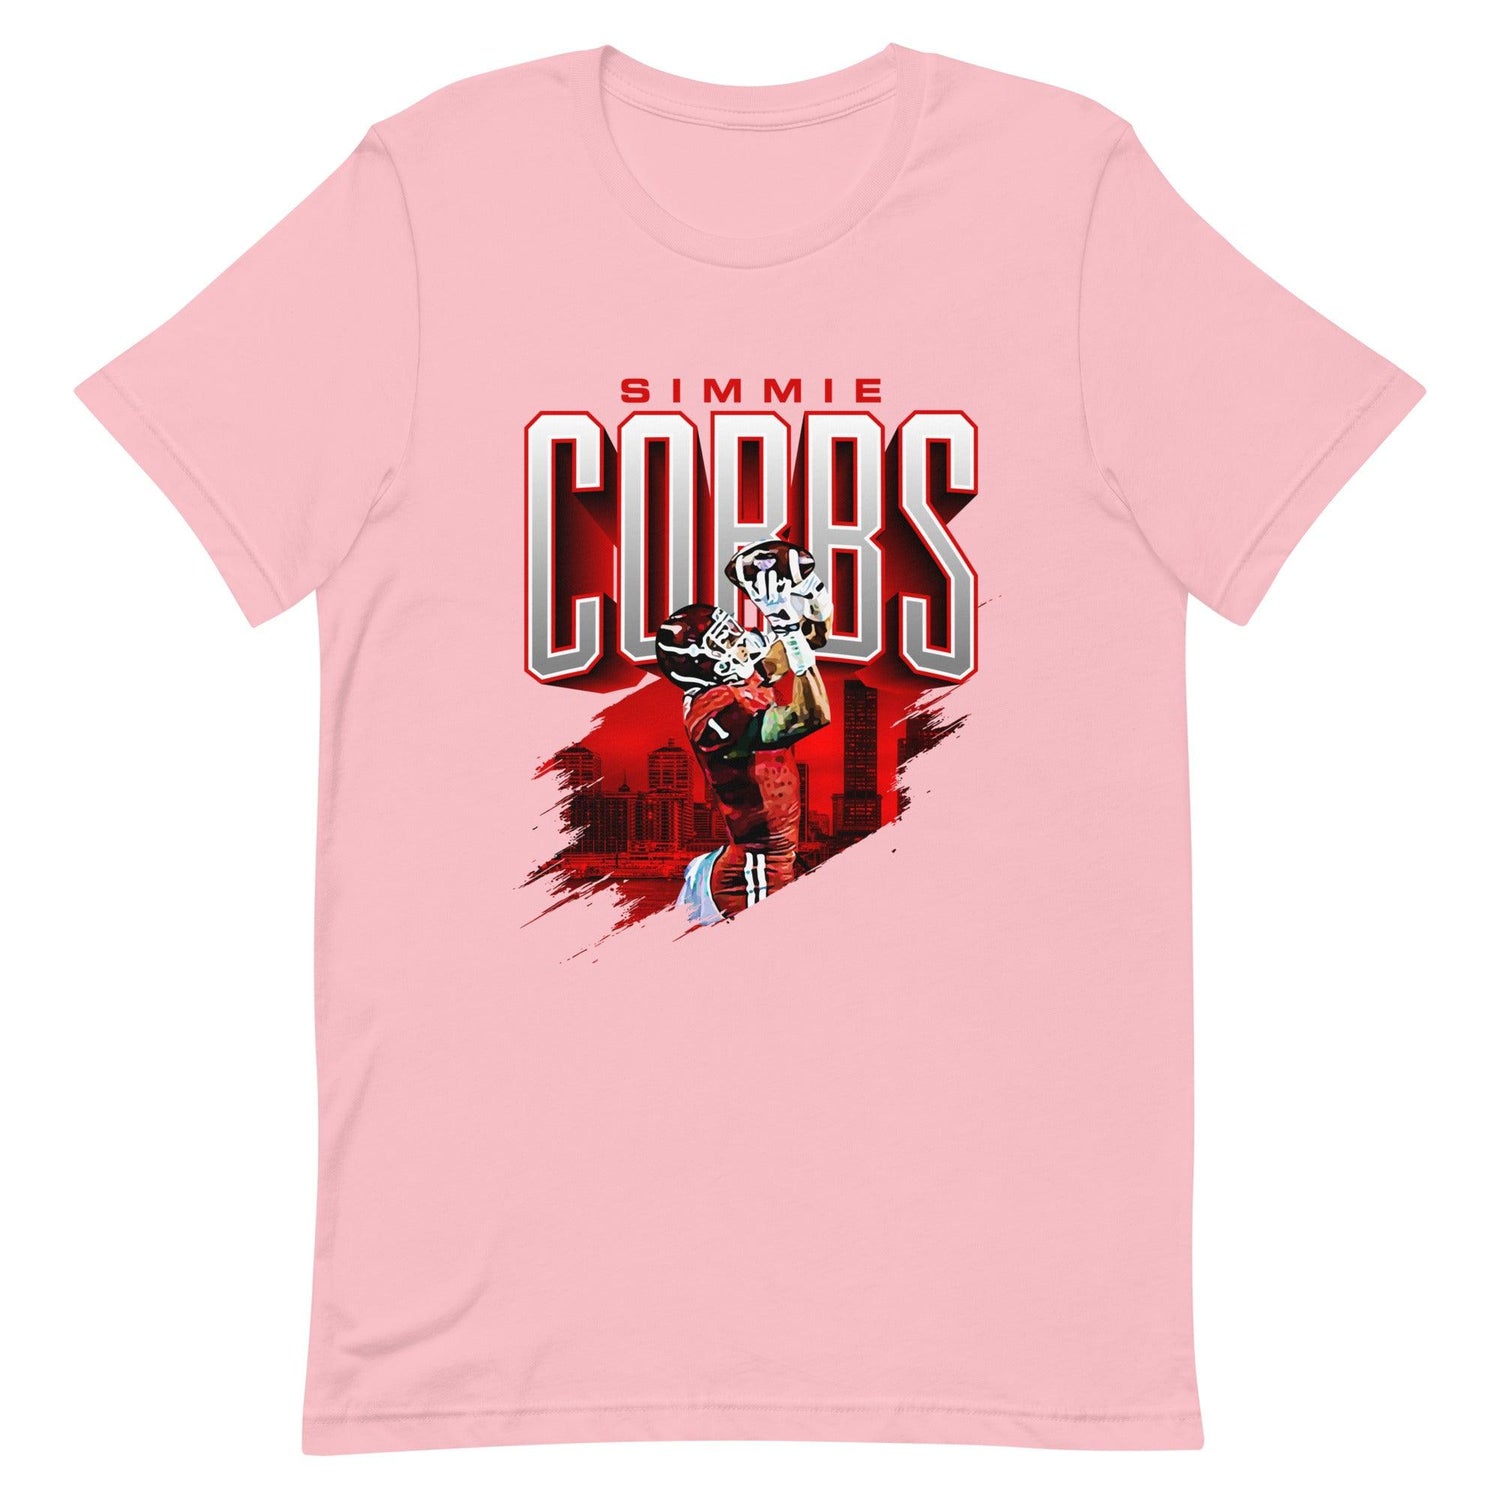 Simmie Cobbs "Gameday" t-shirt - Fan Arch